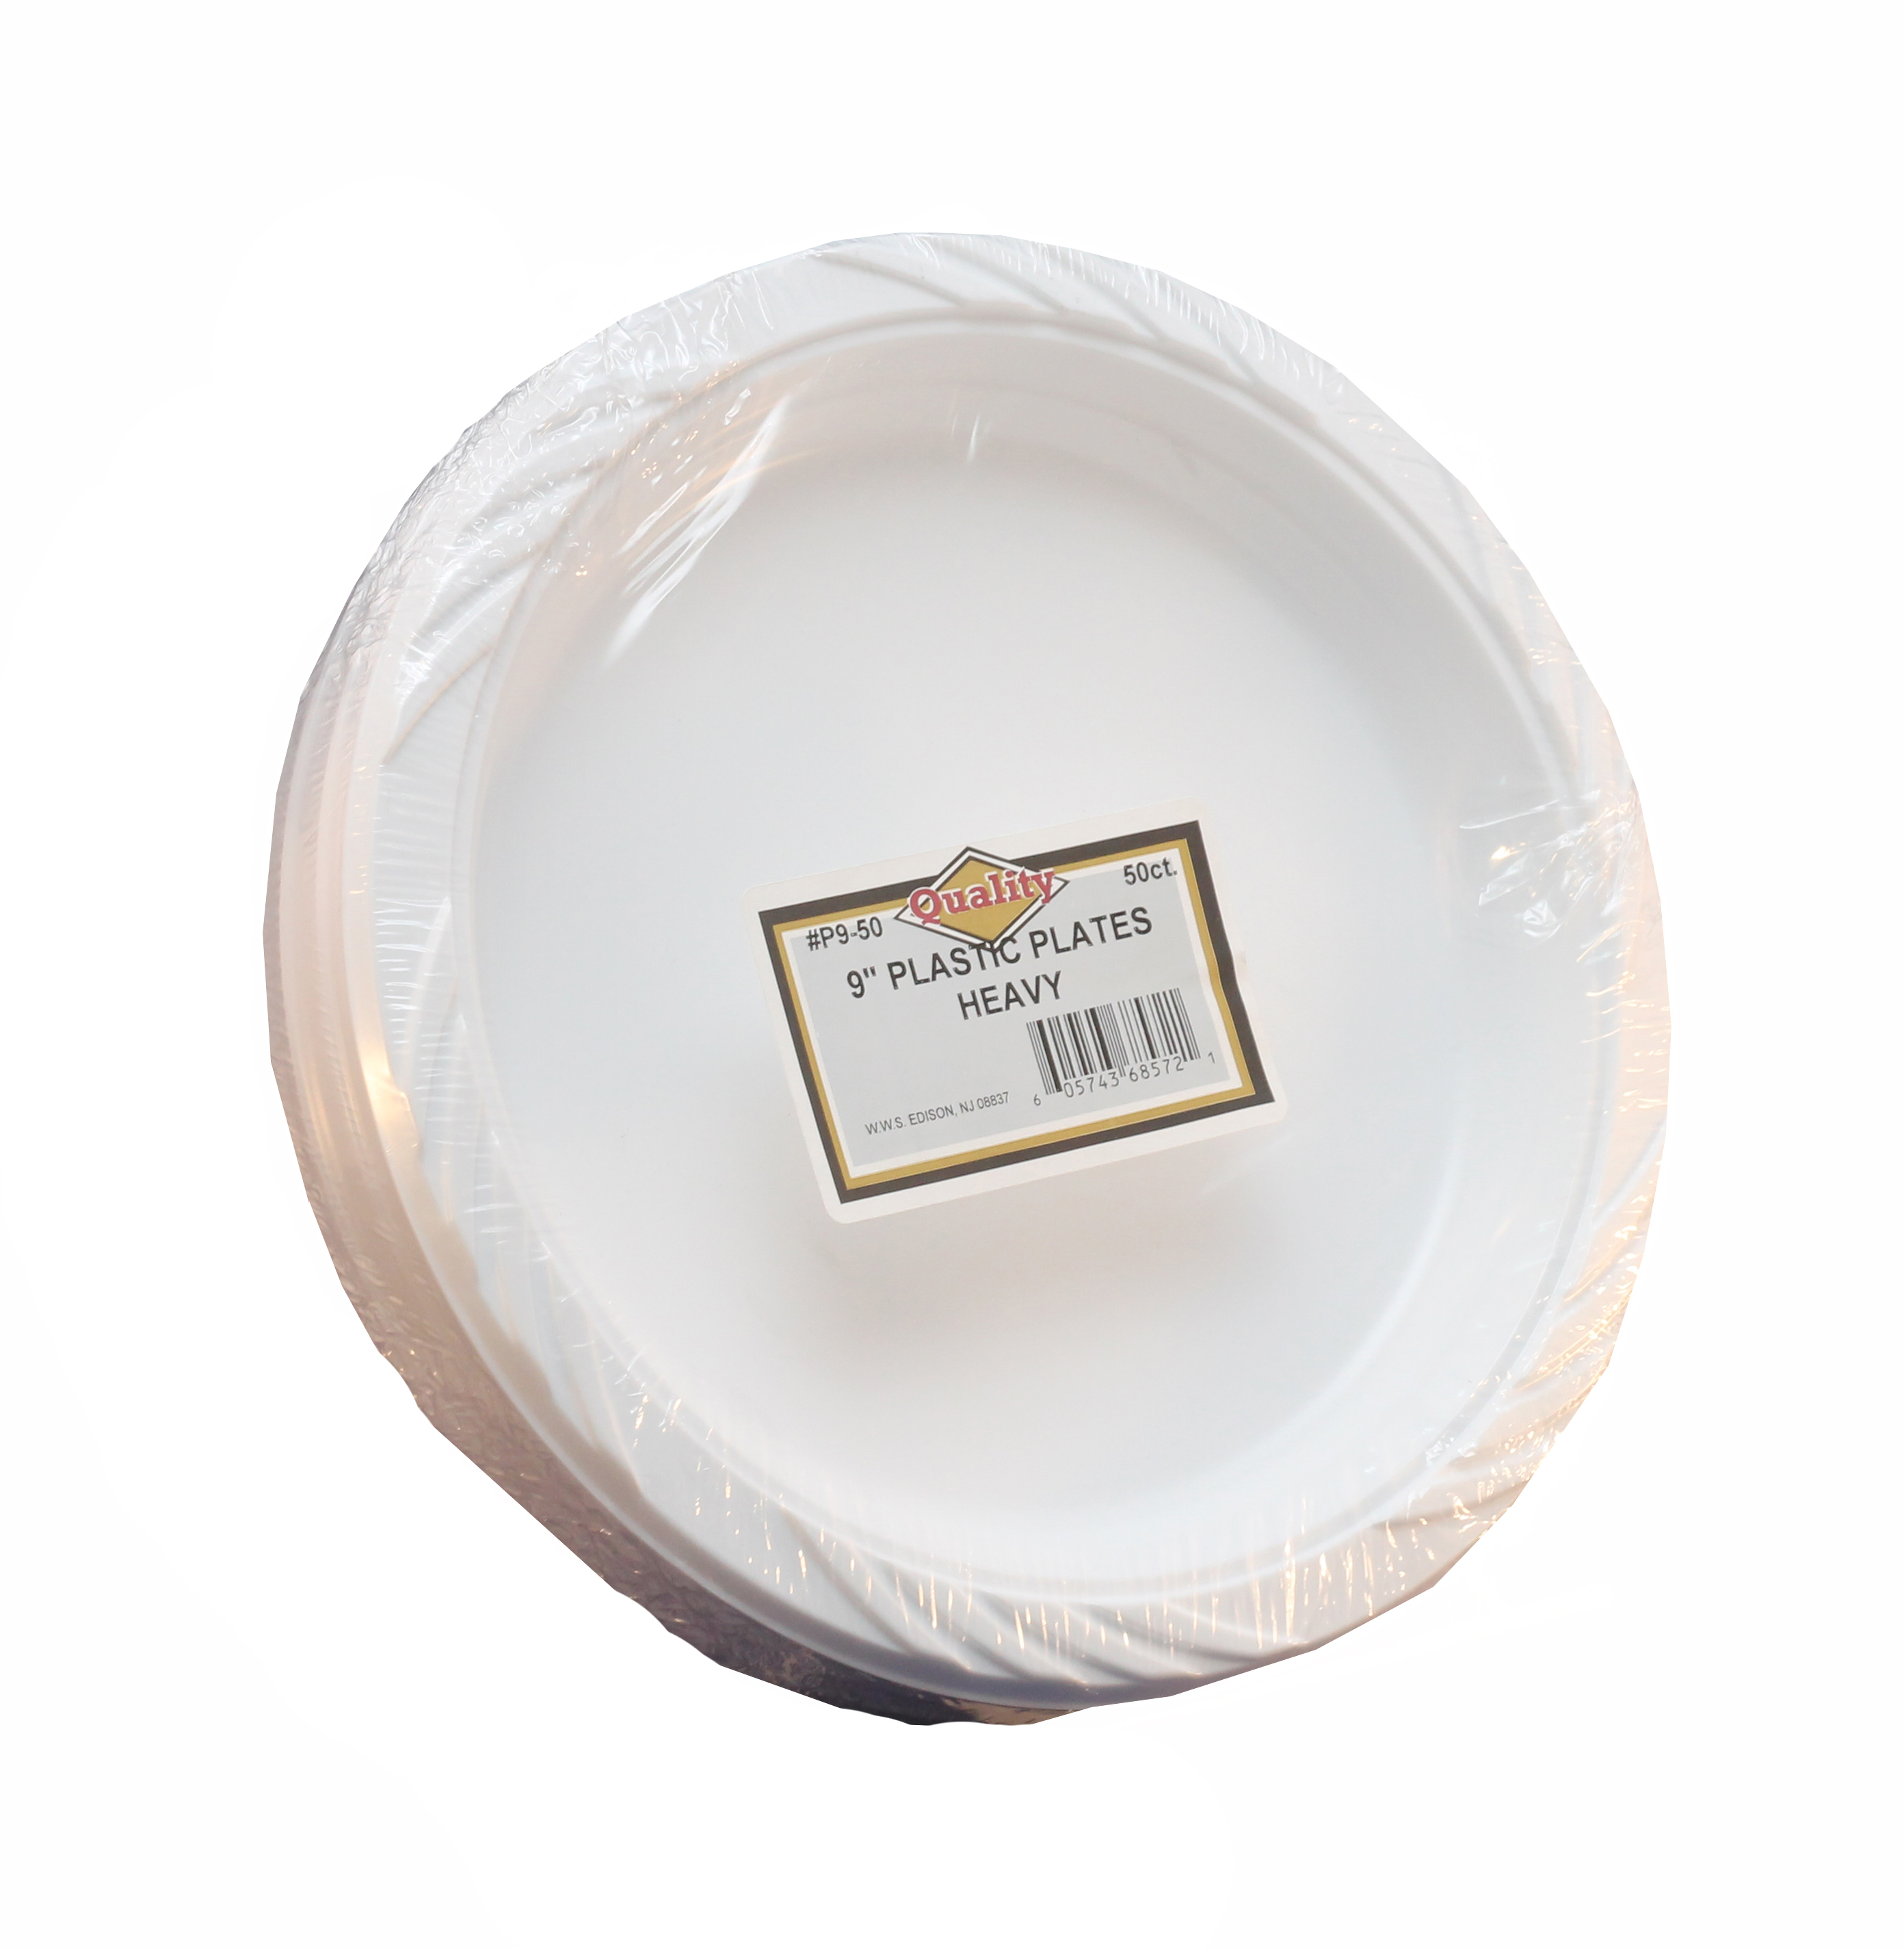 P9/50 Quality White 9" Plastic Plate 20/50 cs - PLST PLATES WHITE 9"     20/50